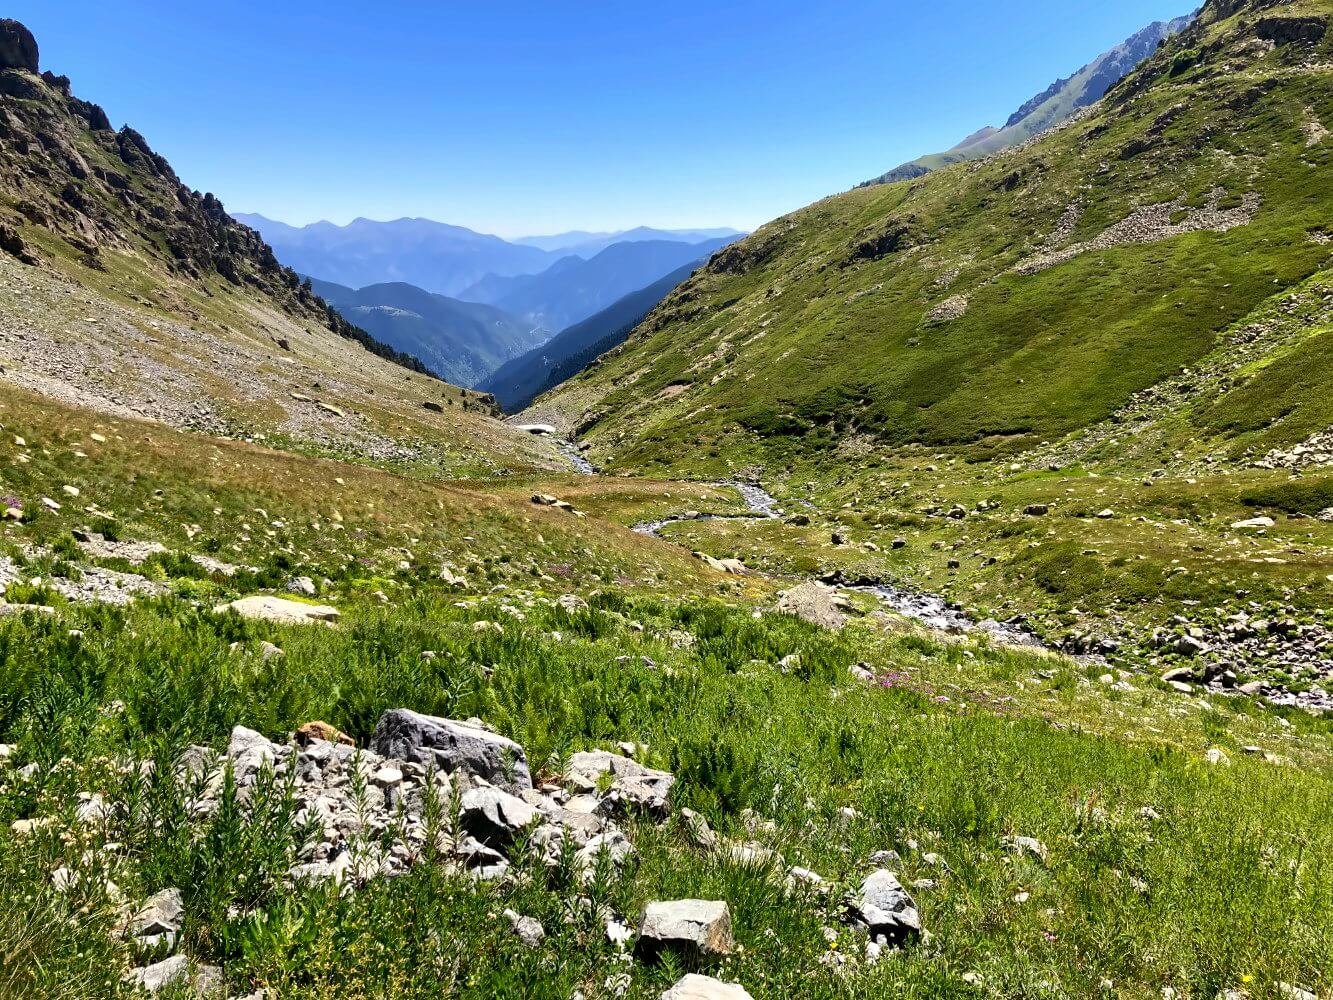 Wanderung im Tal an einem Gebirgsbach in den Kaçkar-Bergen.